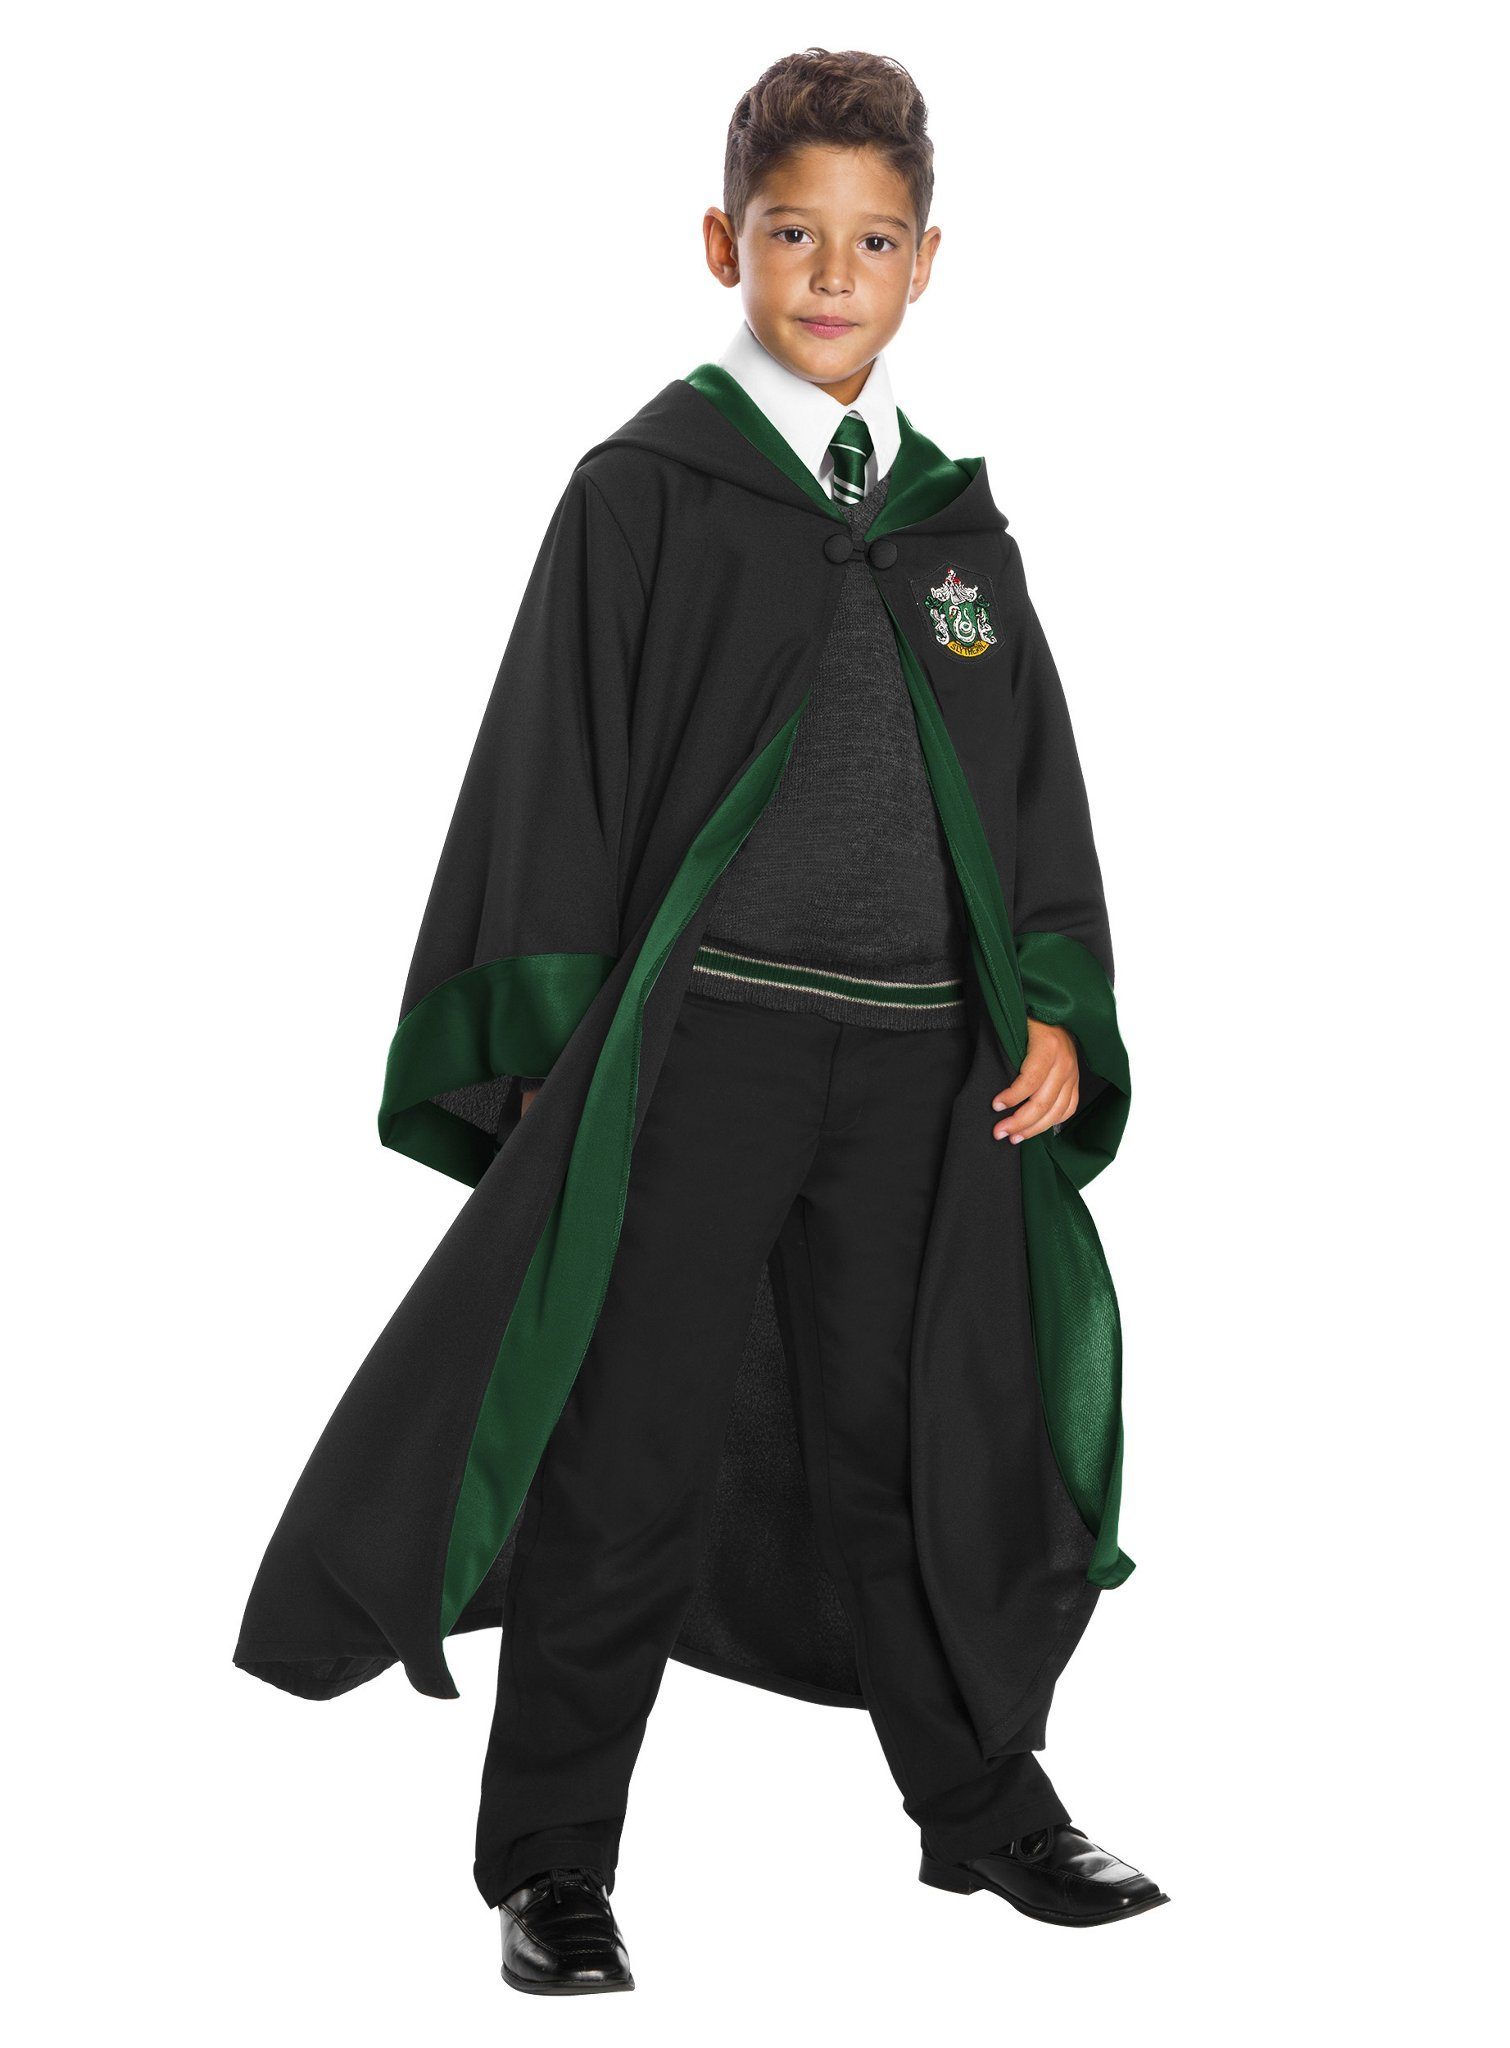 Charades Kostüm Harry Potter Slytherin Premium, Hochwertiges Harry Potter Cosplay-Kostüm für Hogwarts-Zauberschüler